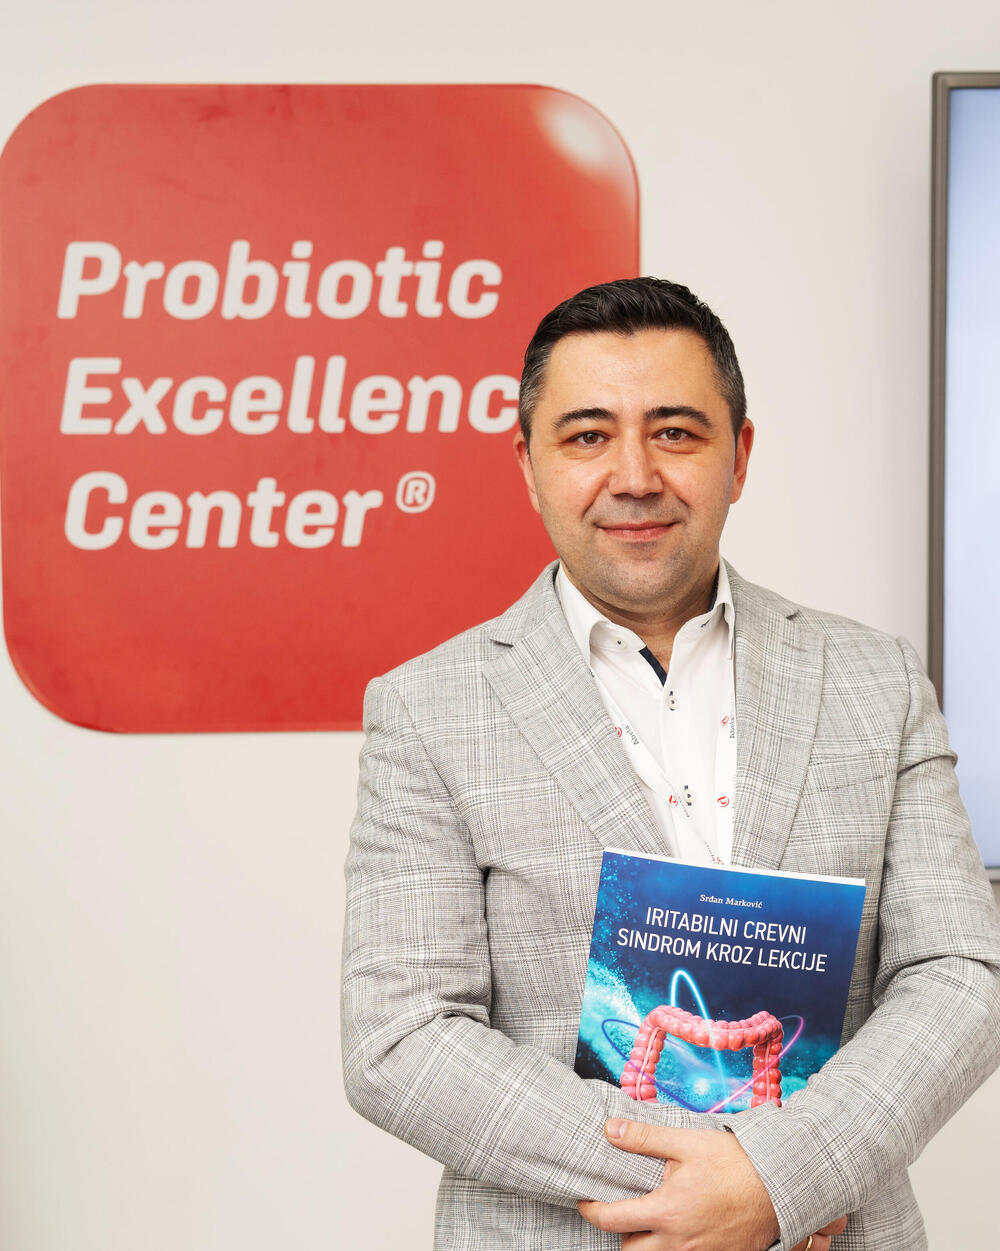 Proton, Probiotic Excellence Center